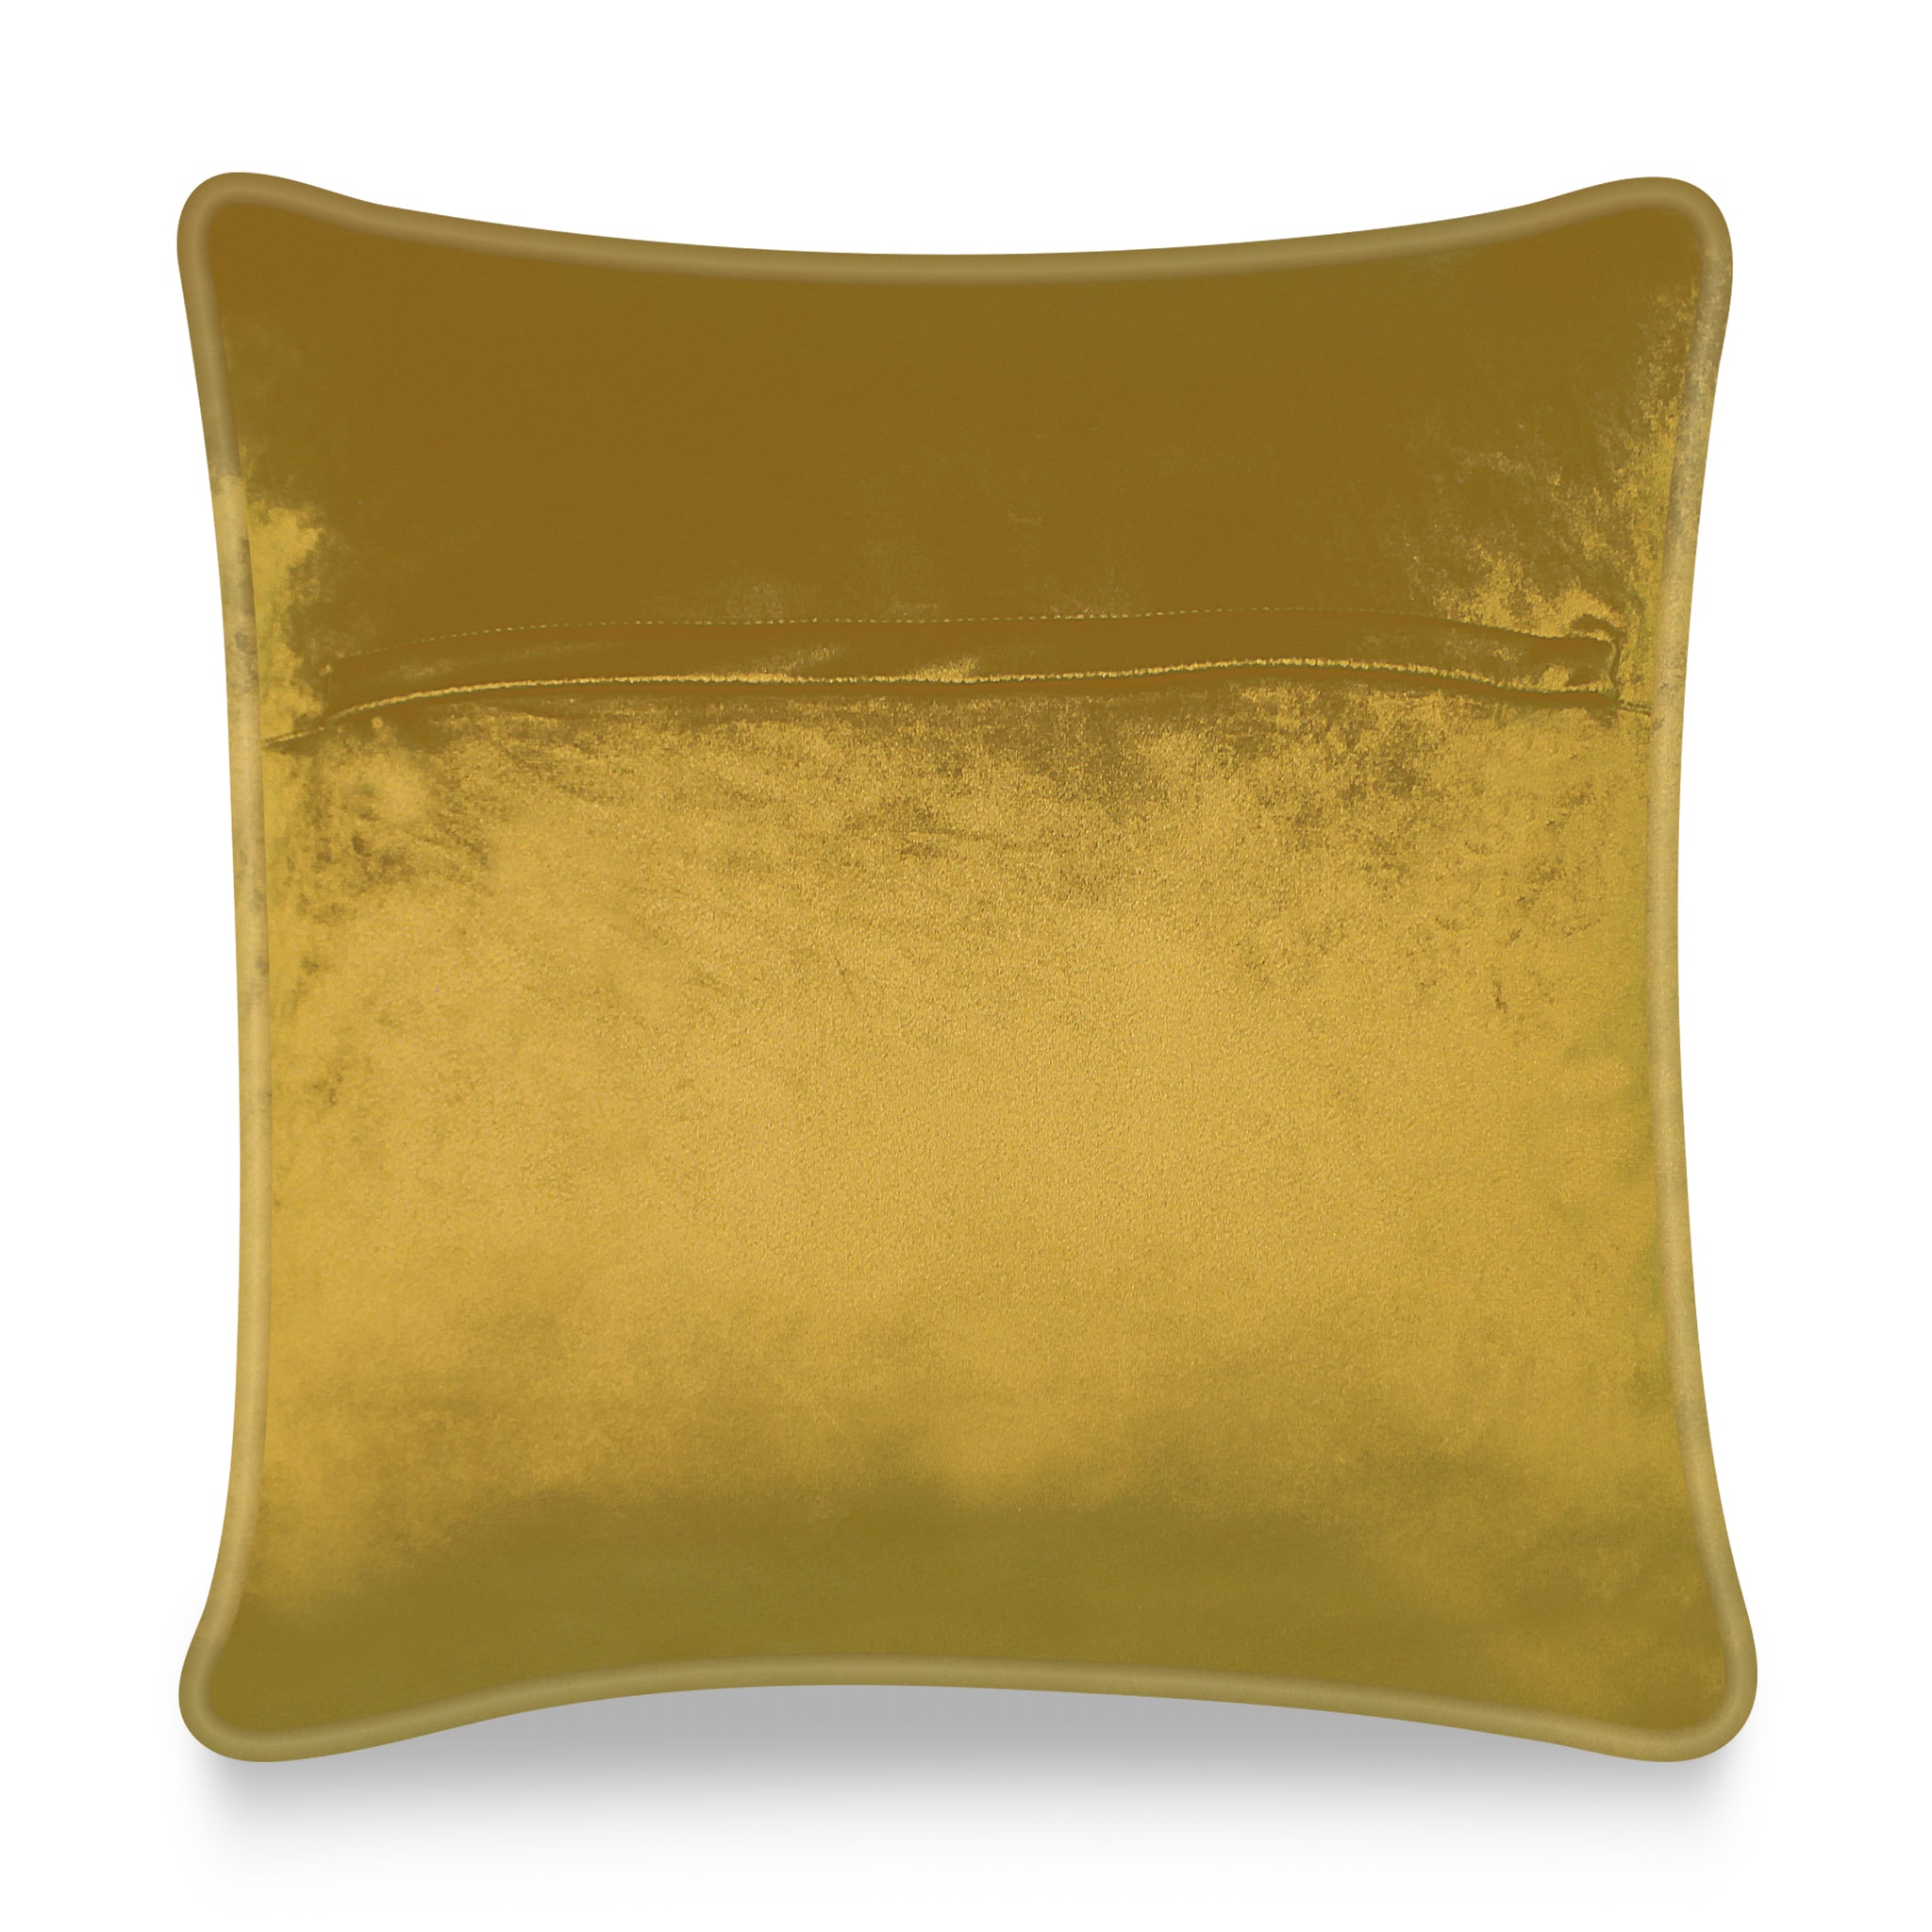  Velvet Cushion Cover Abstract Watercolor Brush Strokes Decorative Pillowcase Modern Home Decor Throw Pillow for Sofa Chair 45x45 cm 